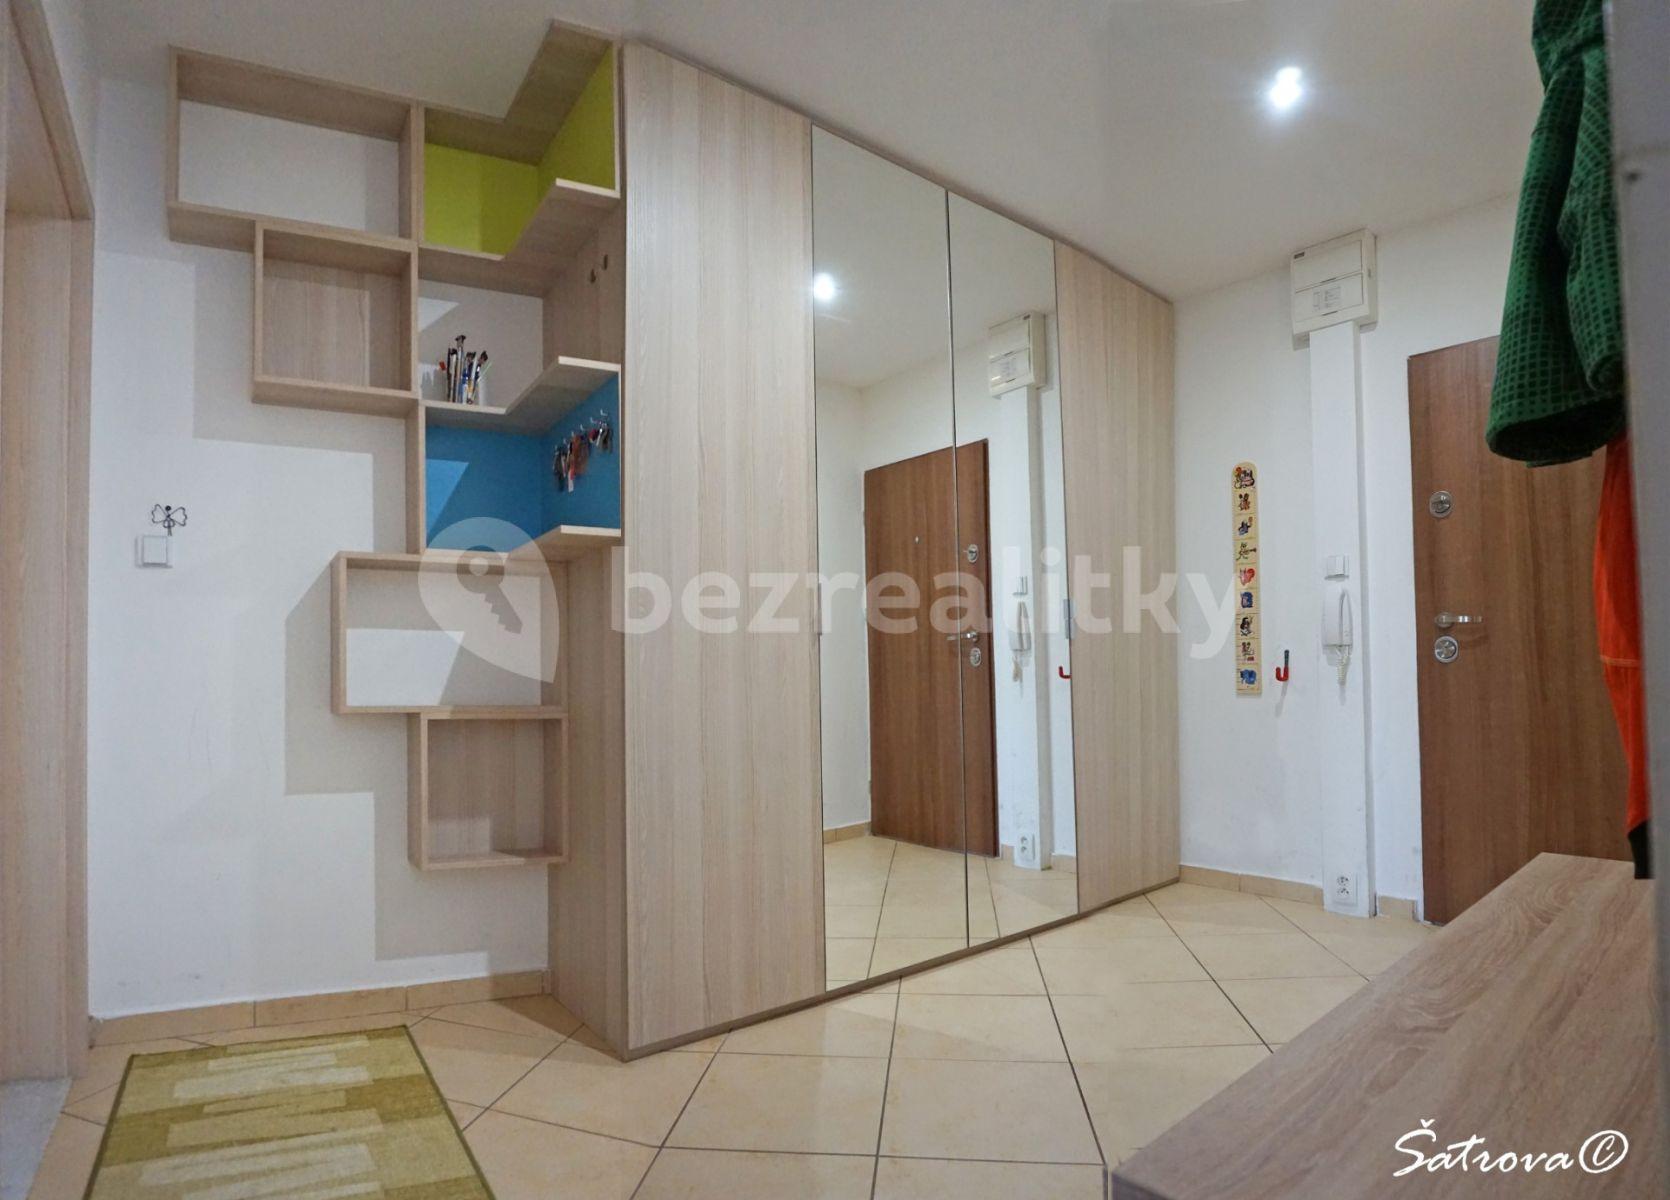 Pronájem bytu 3+1 65 m², Šatrova, Praha, Praha